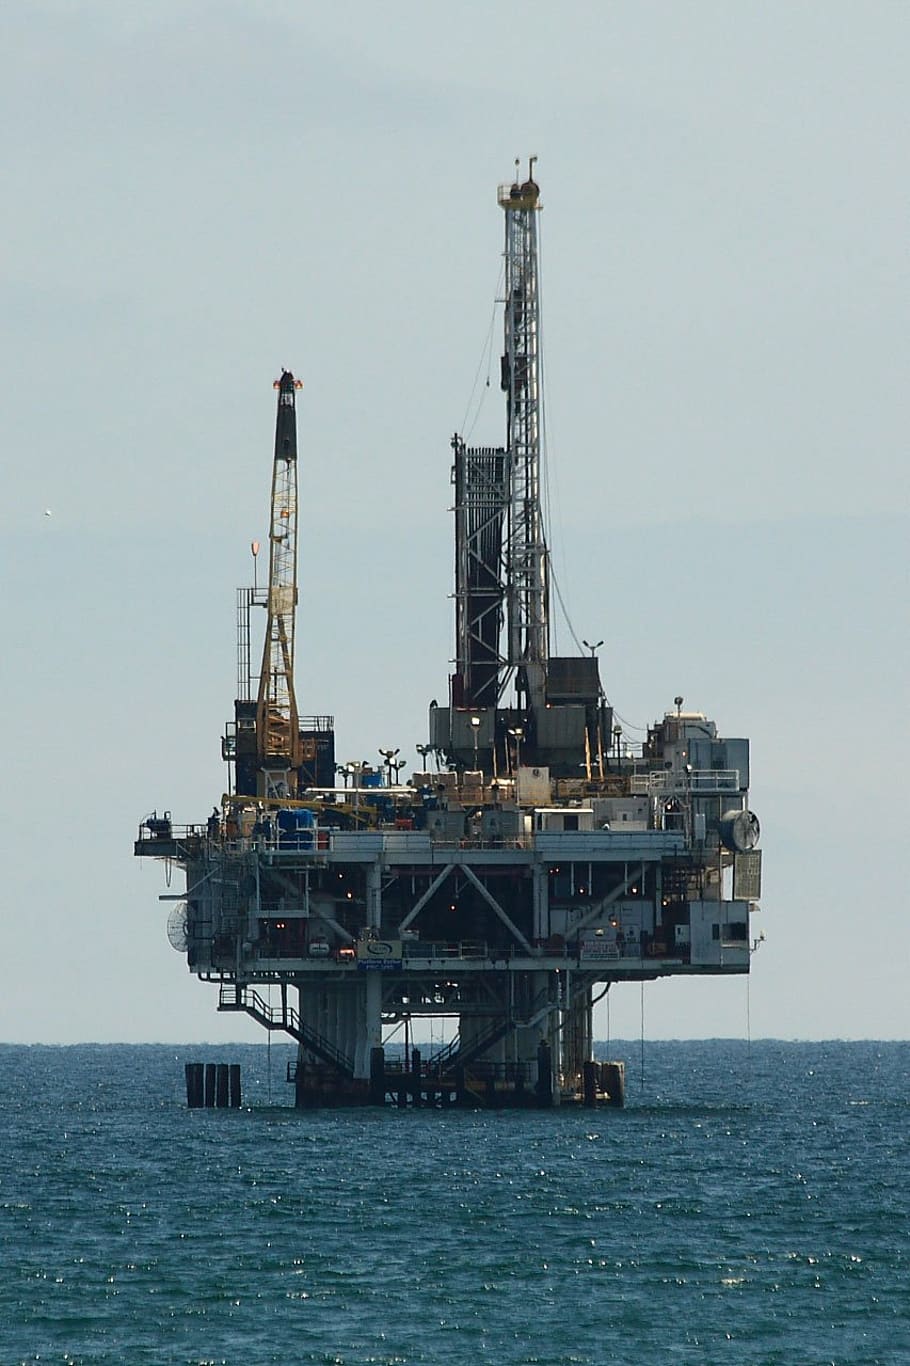 oil, drilling, offshore, platform, industry, energy, industrial